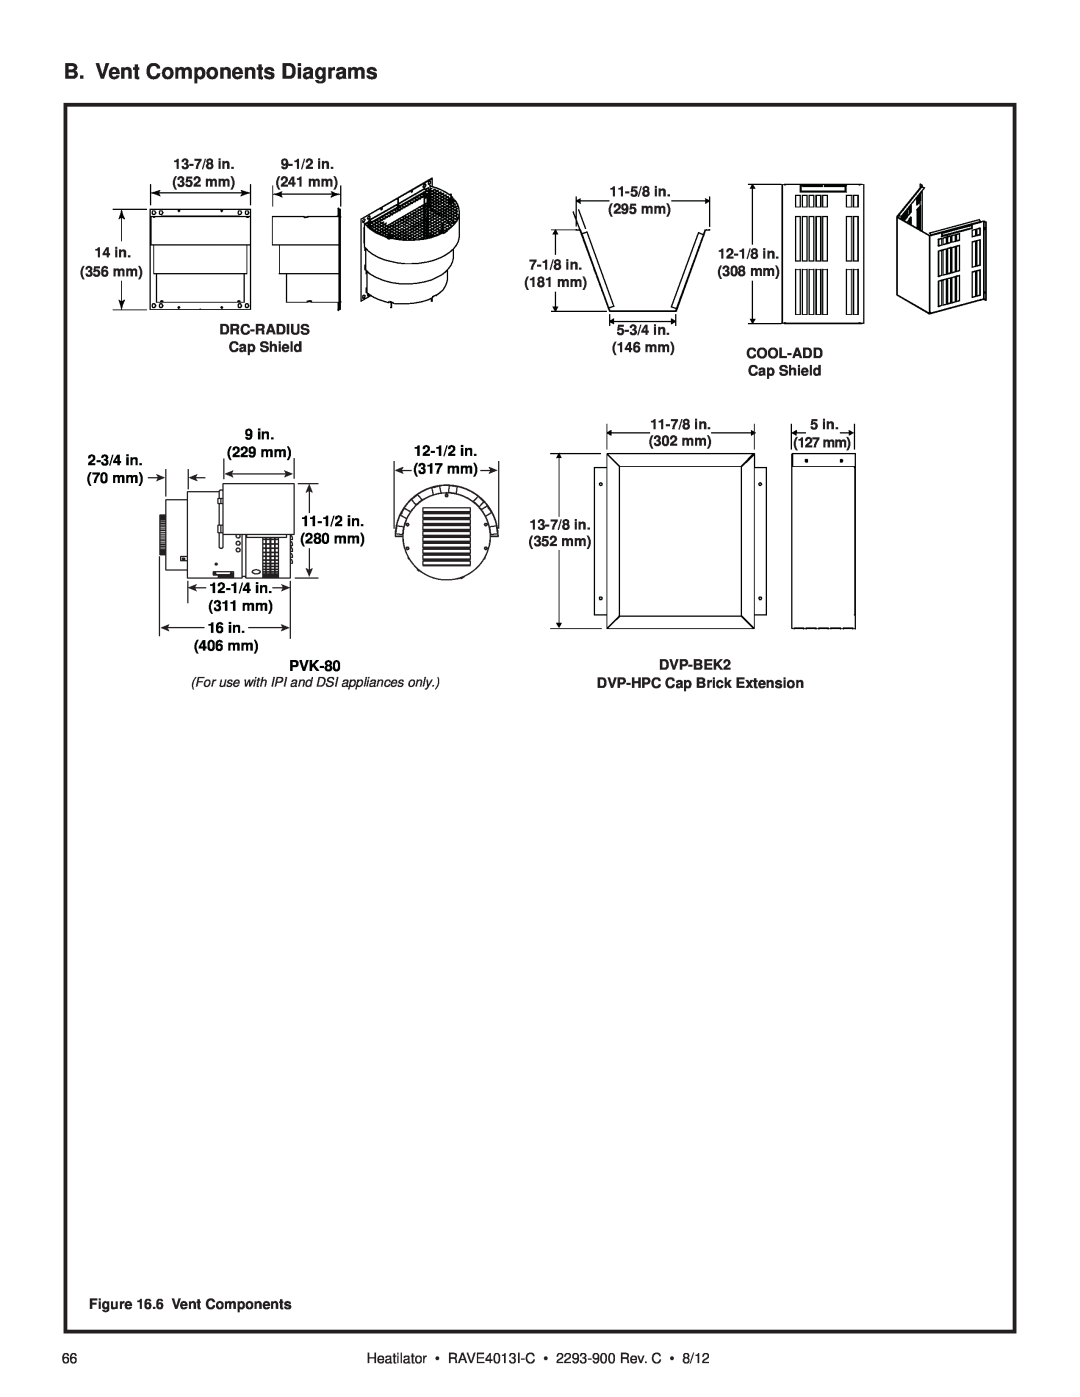 Heatiator Rave4013i-c B. Vent Components Diagrams, 13-7/8in, 9-1/2in, 352 mm, 11-5/8in, 295 mm, 14 in, 7-1/8in, 12-1/8in 